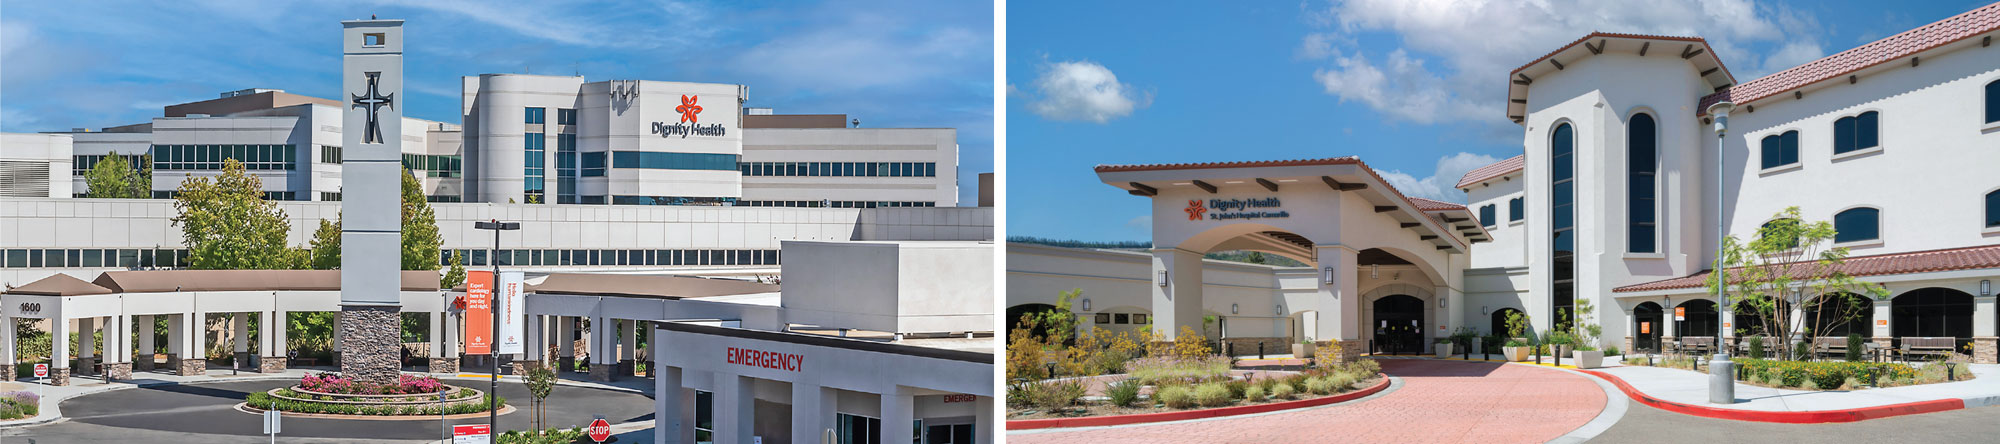 Both St. John's Hospitals